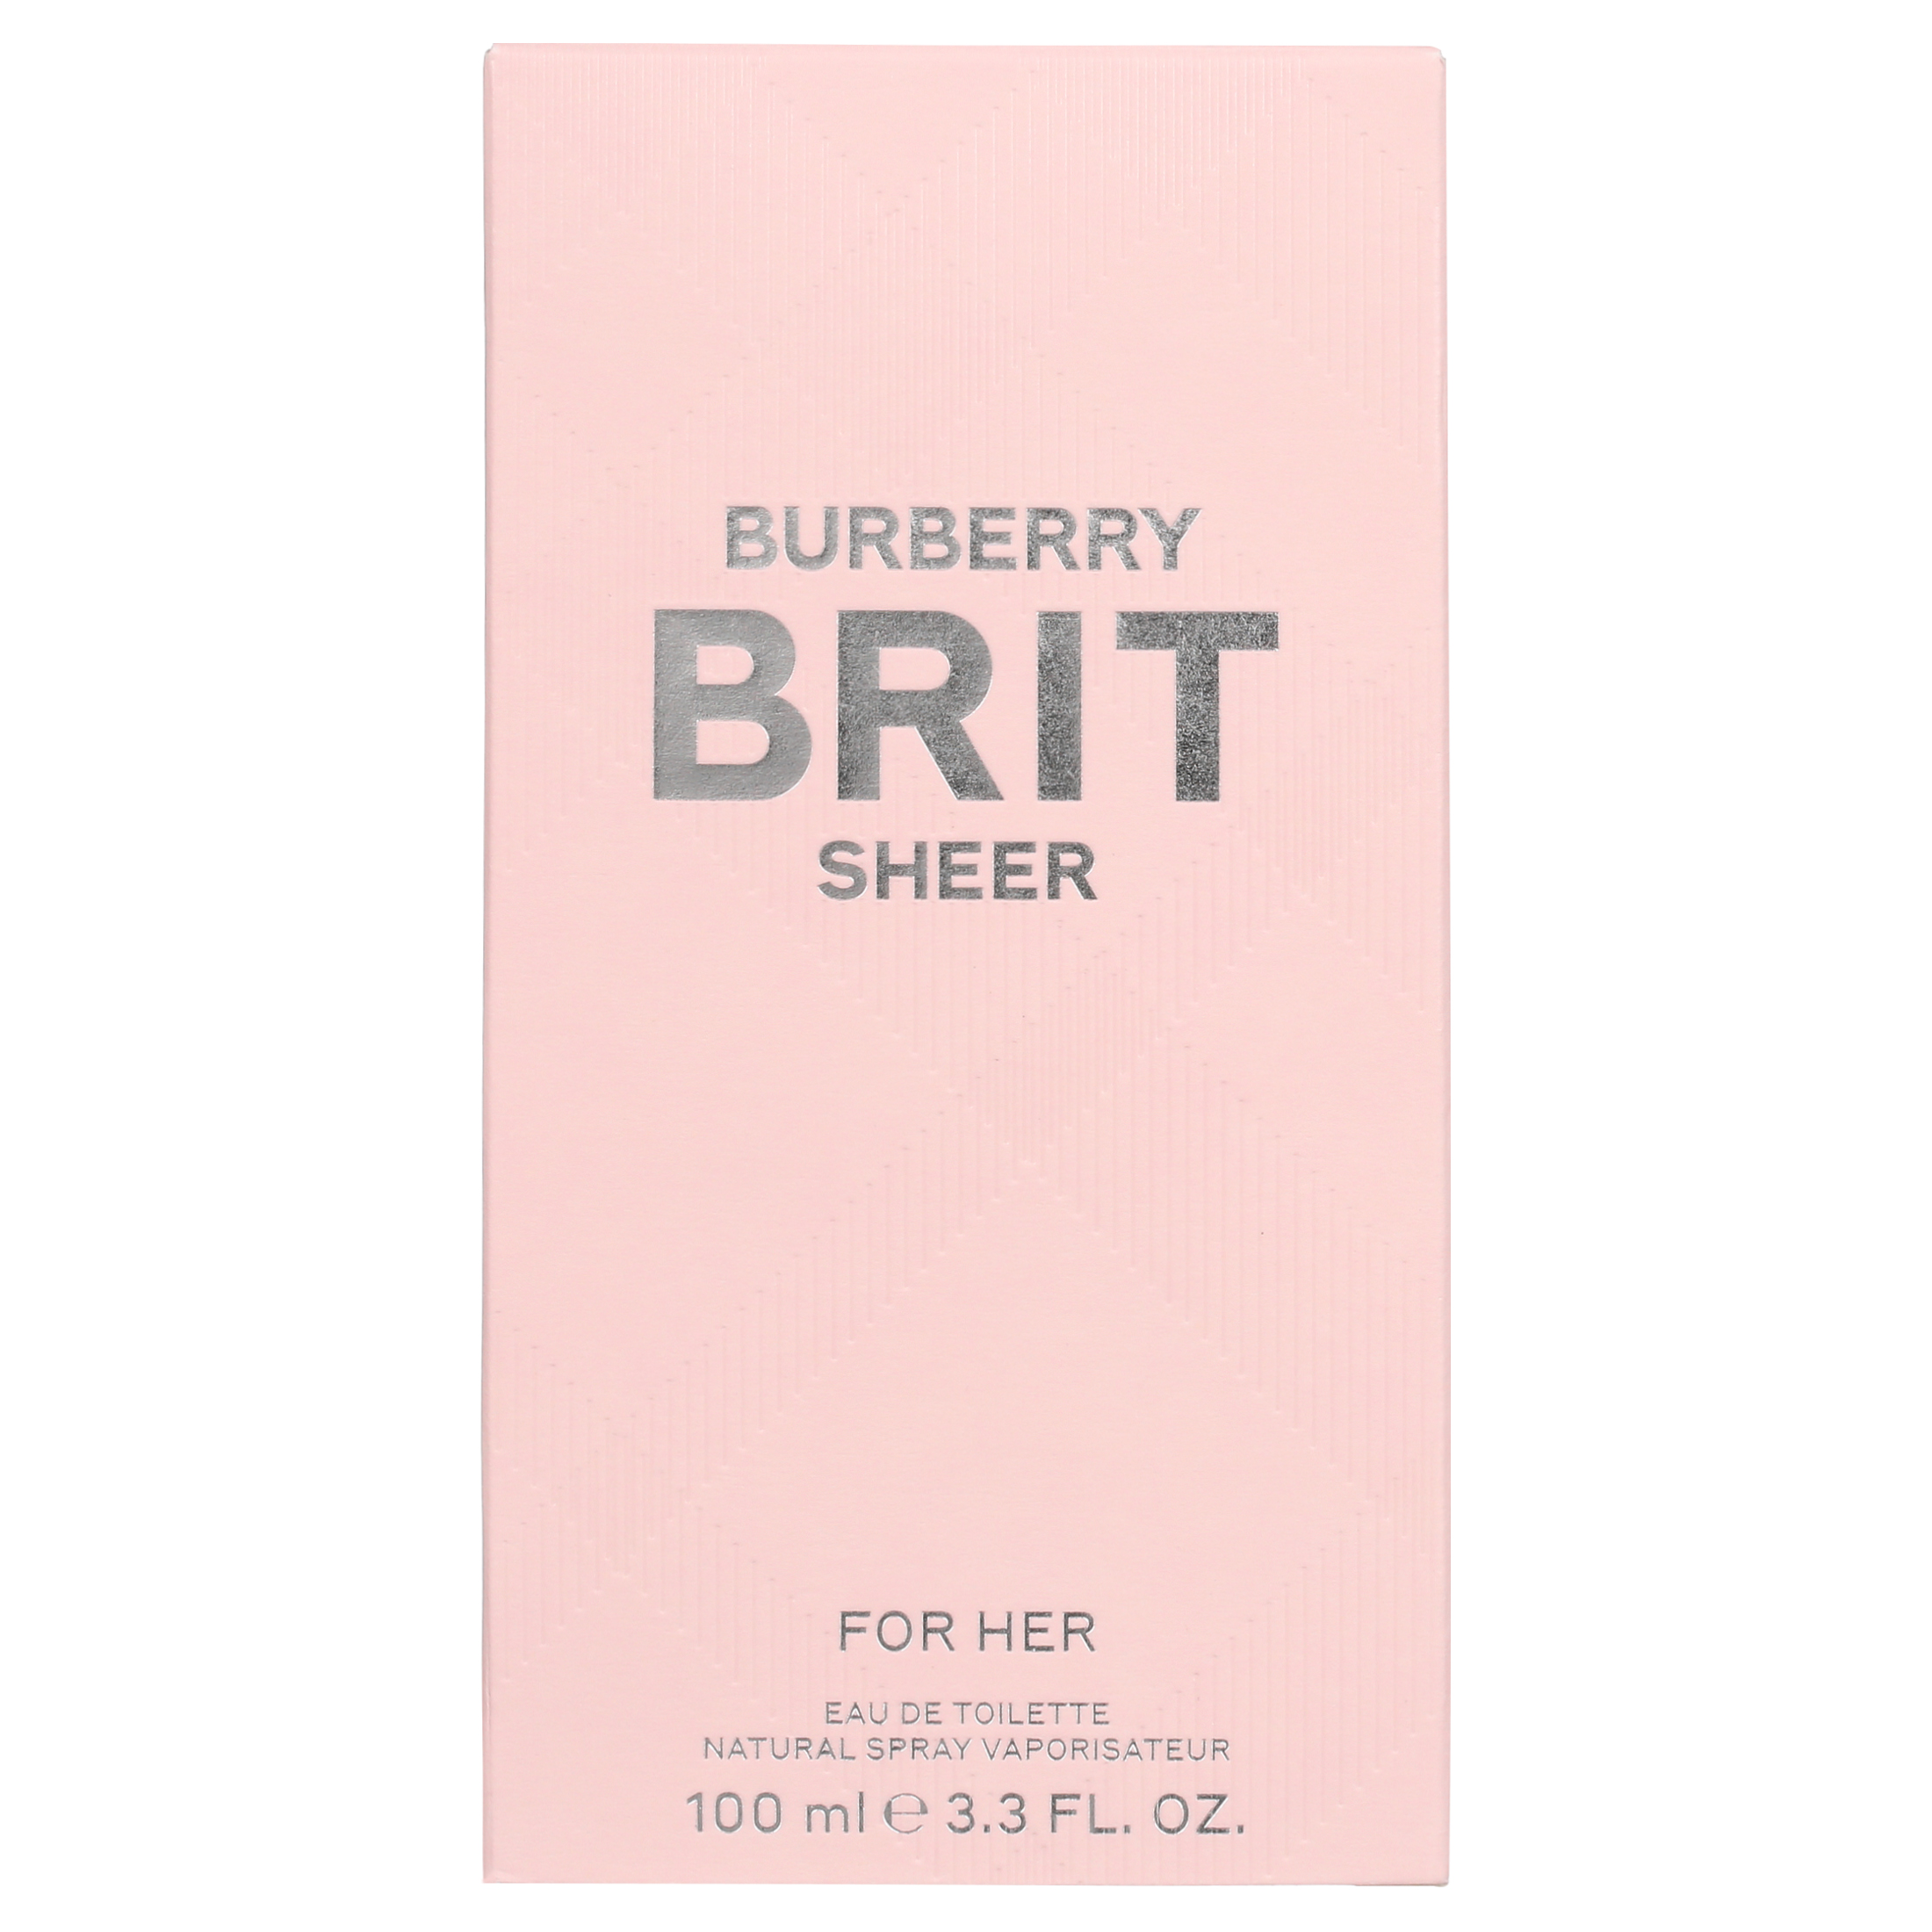 Burberry Brit Sheer Eau De Toilette Spray, Perfume for Women, 3.3 oz - image 3 of 5